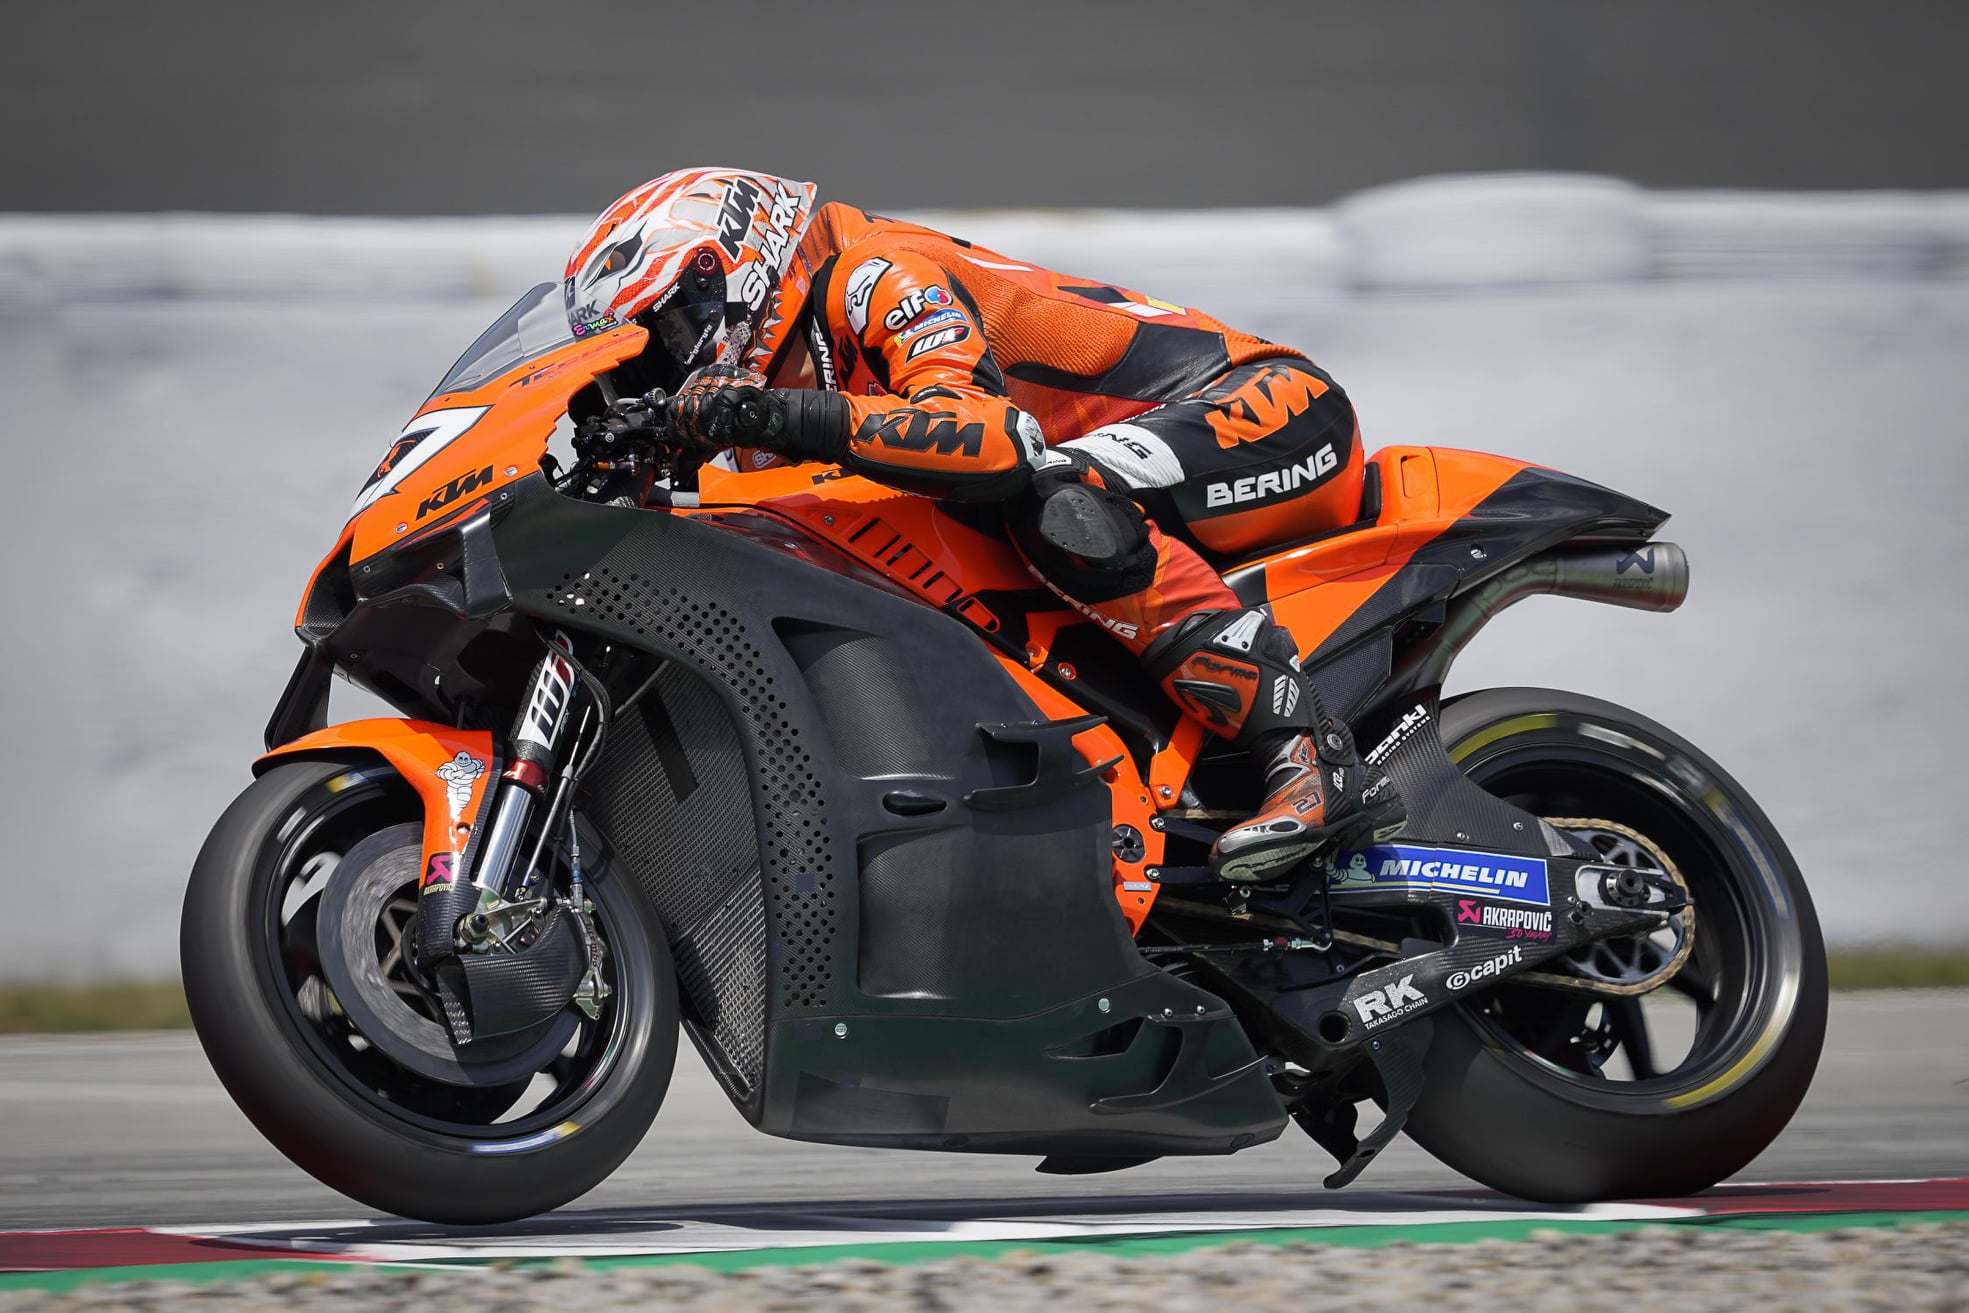 “Atitude Espiã” MotoGP: Chassis, braço oscilante, escapamento, aerodinâmica… o teste na Catalunha foi frutífero para a KTM